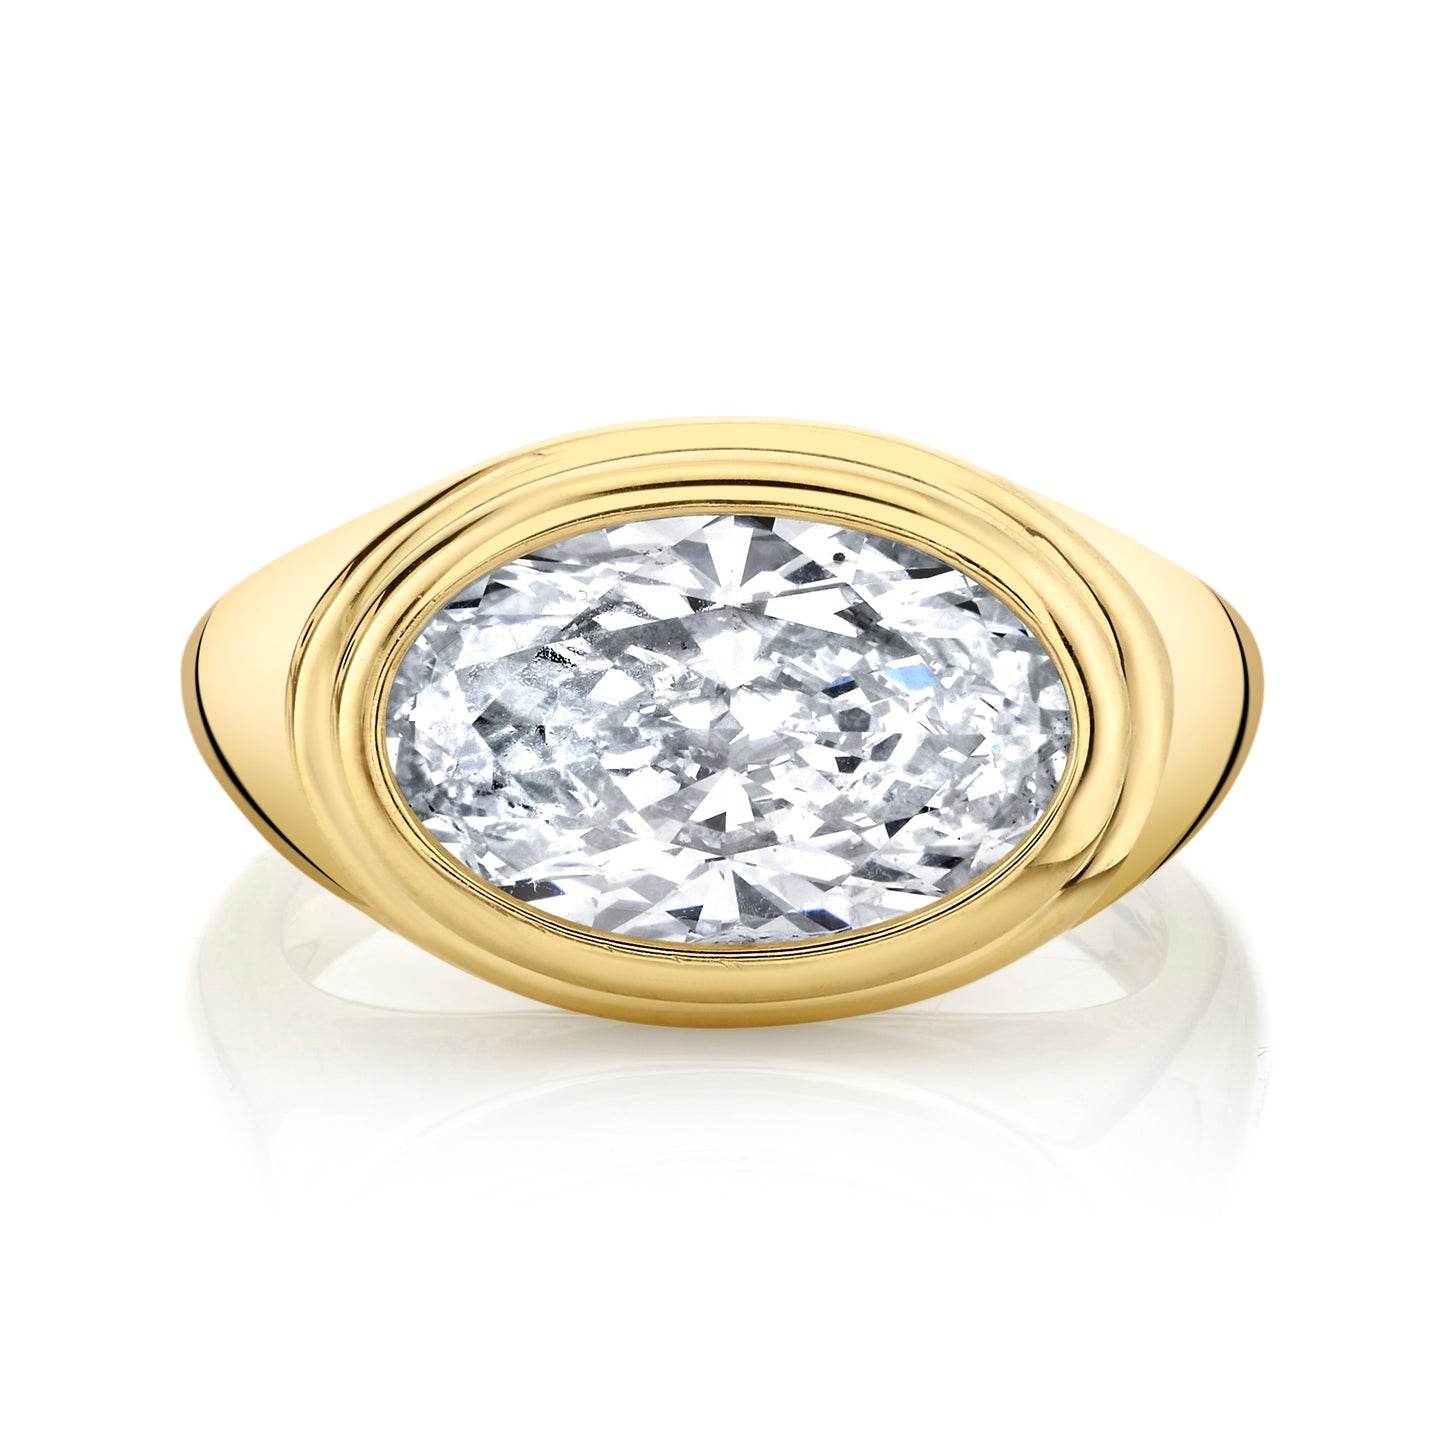 Bezel-set Oval Cut Diamond Ring